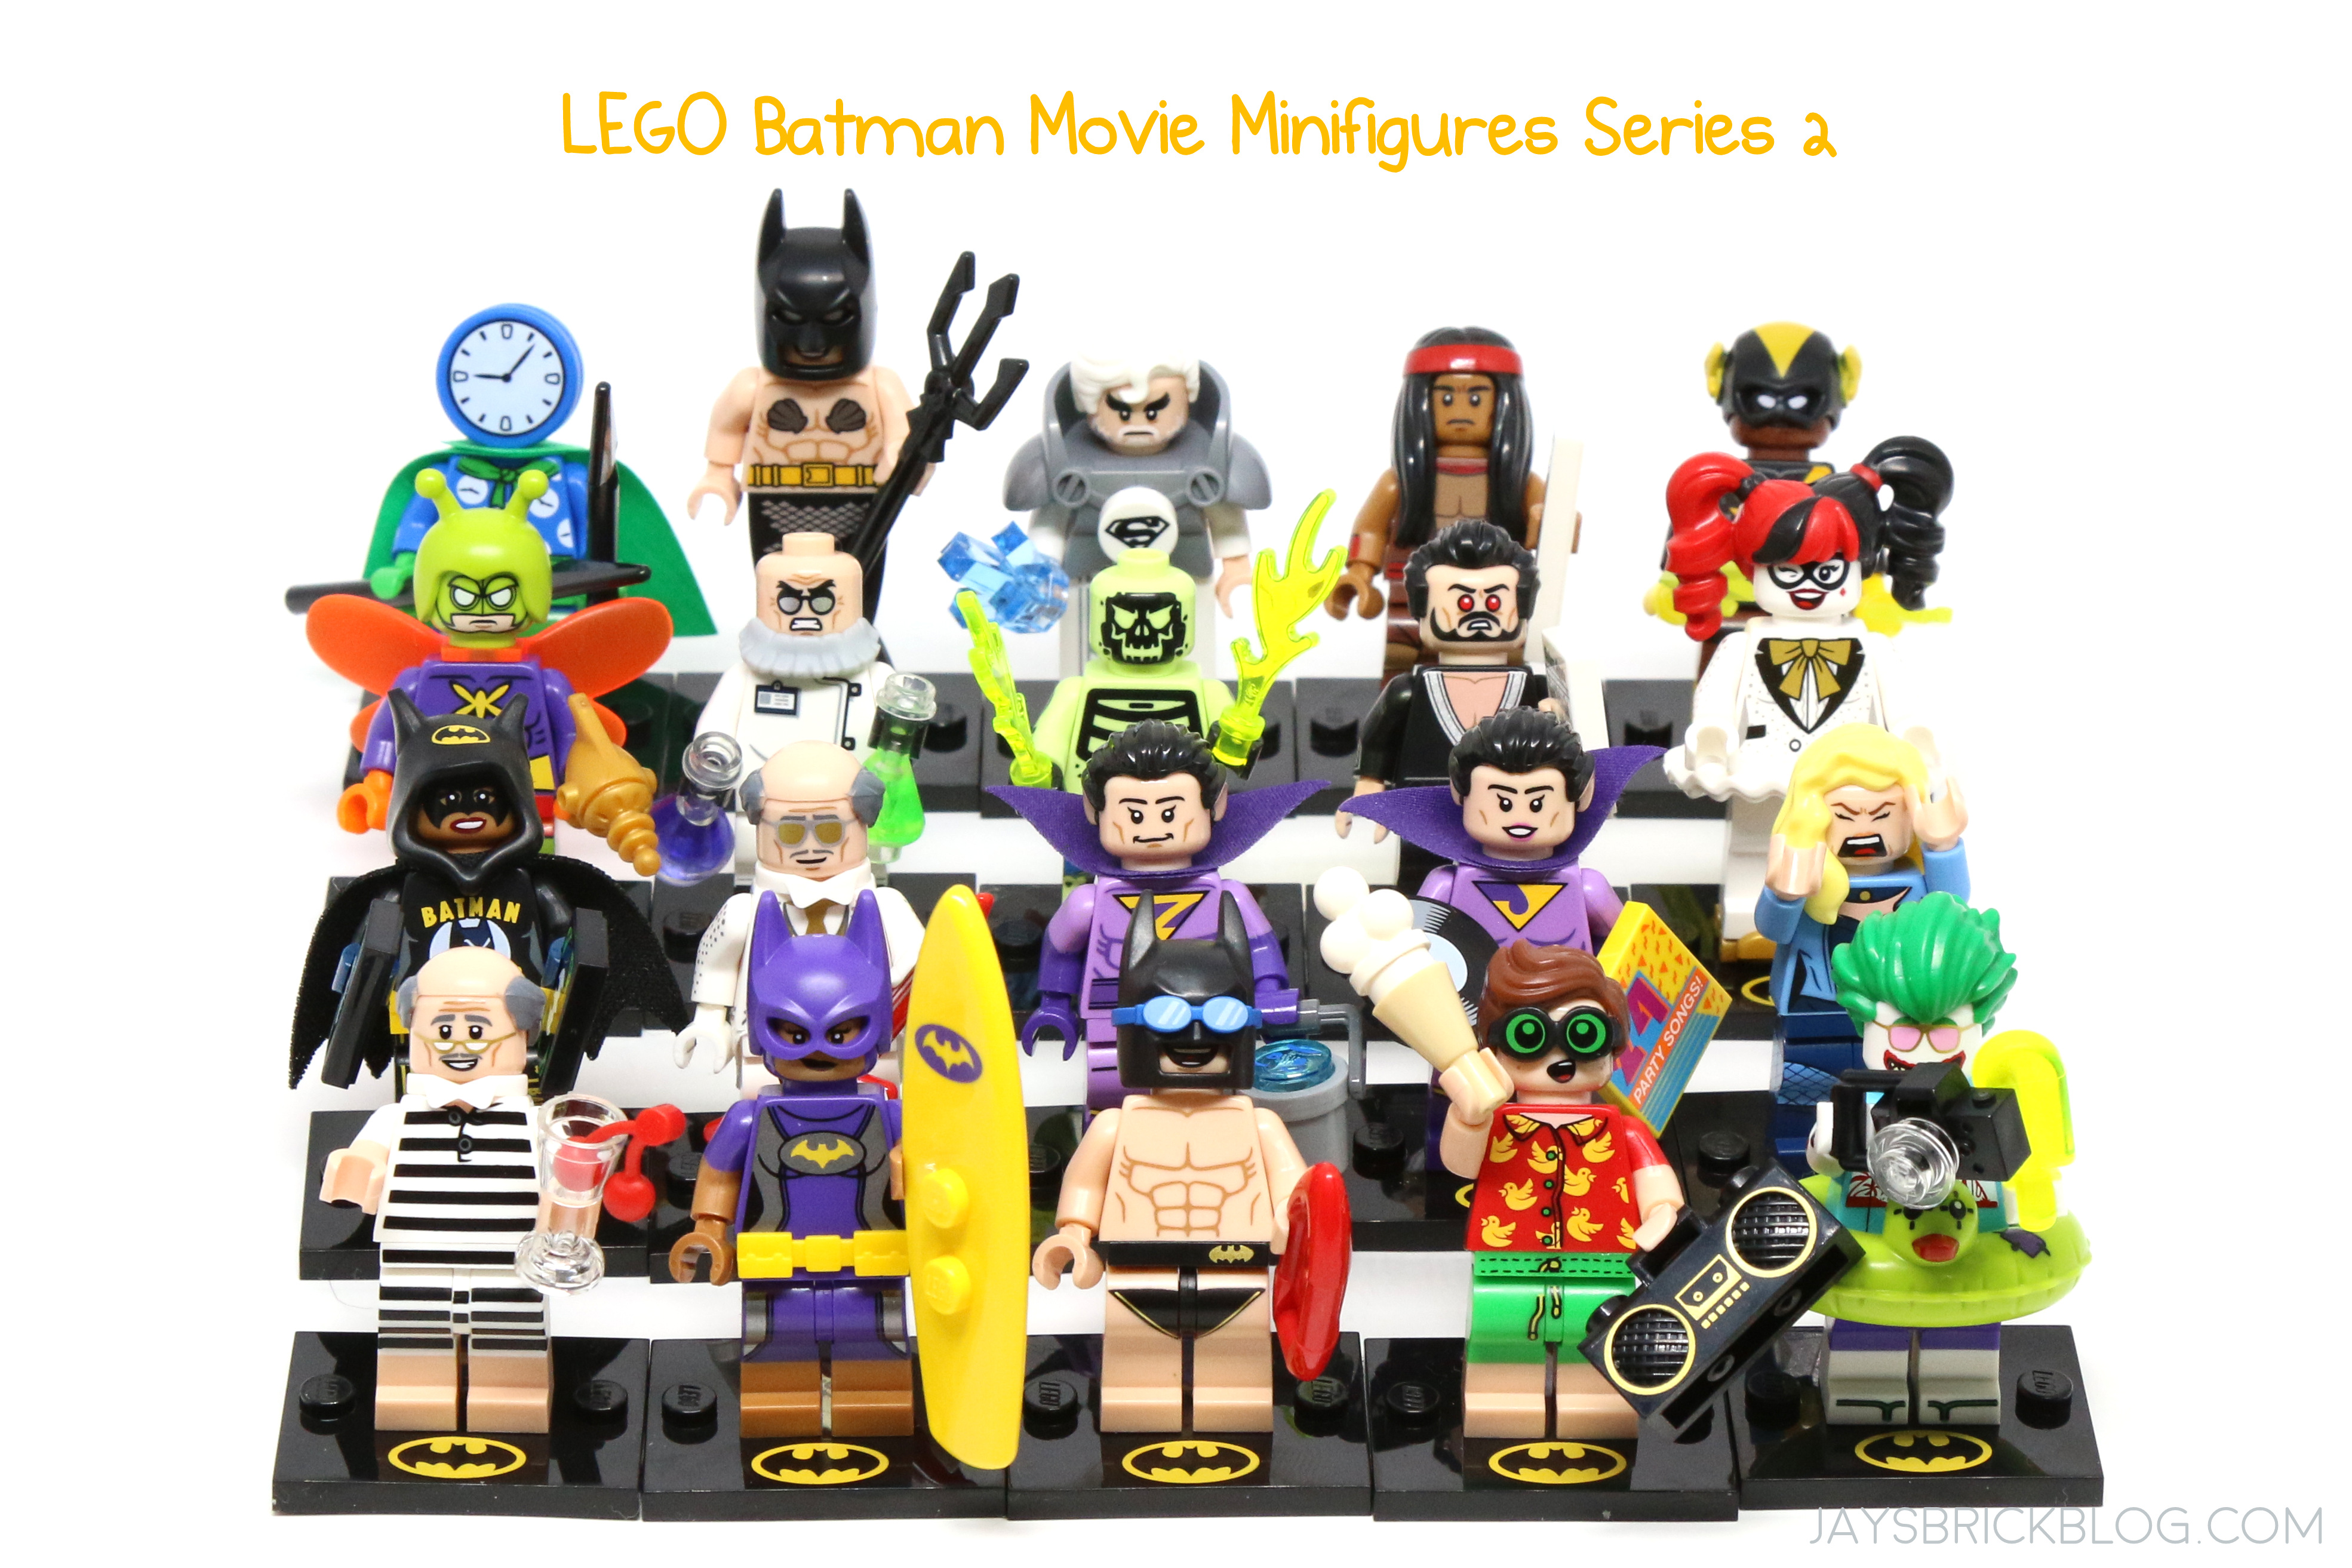 LEGO THE BATMAN MOVIE MINIFIGURE DOLLAR BILL TUXEDO EXCLUSIVE COLLECTION NEW